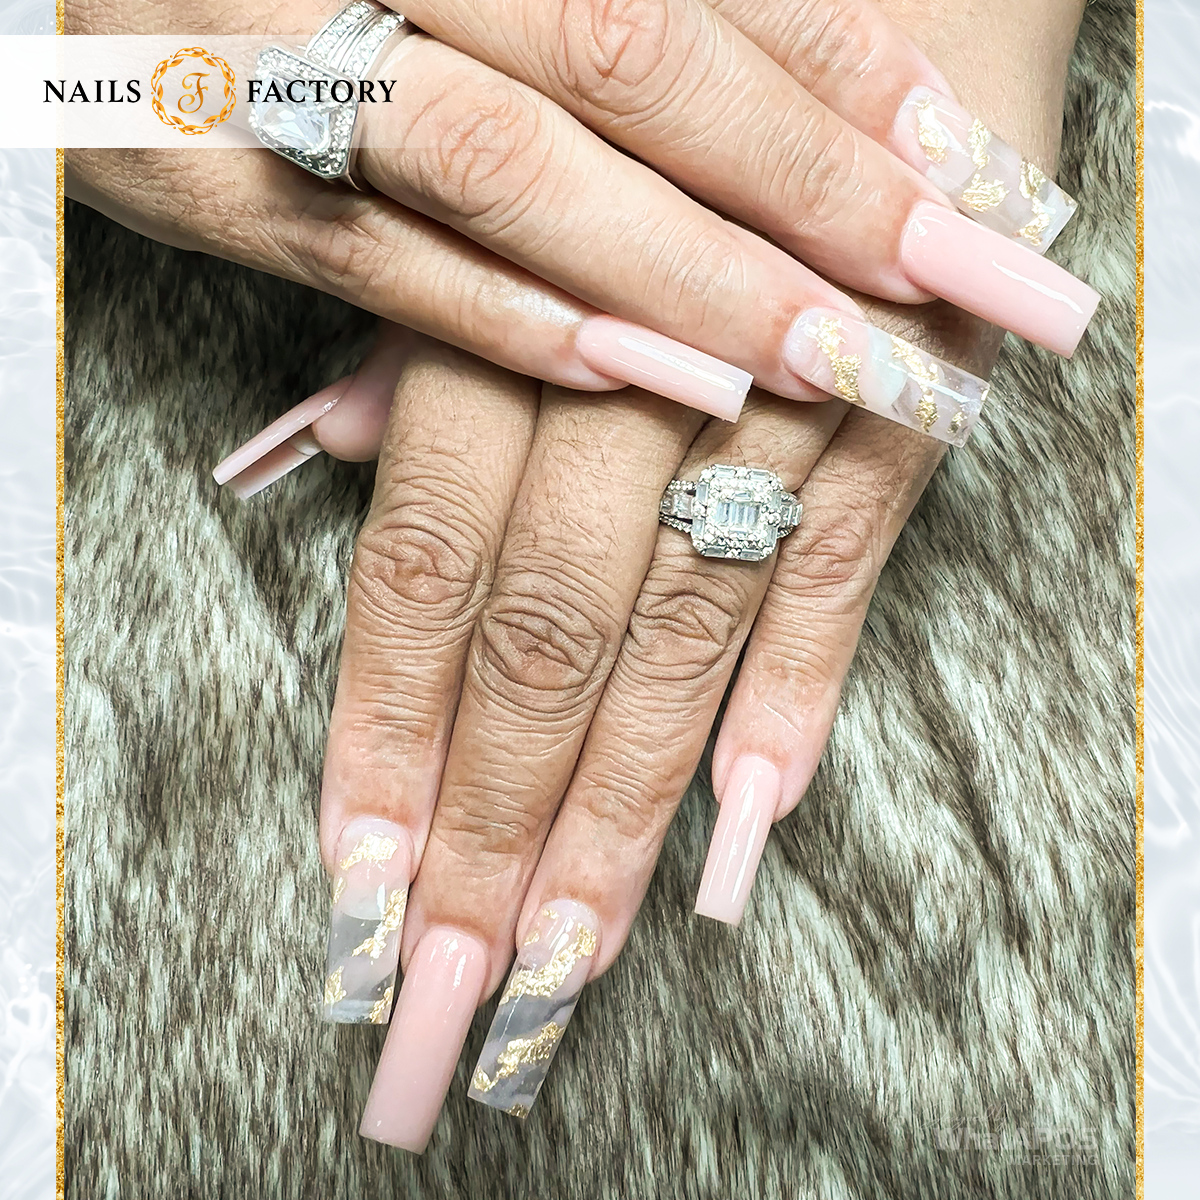 Nails Factory